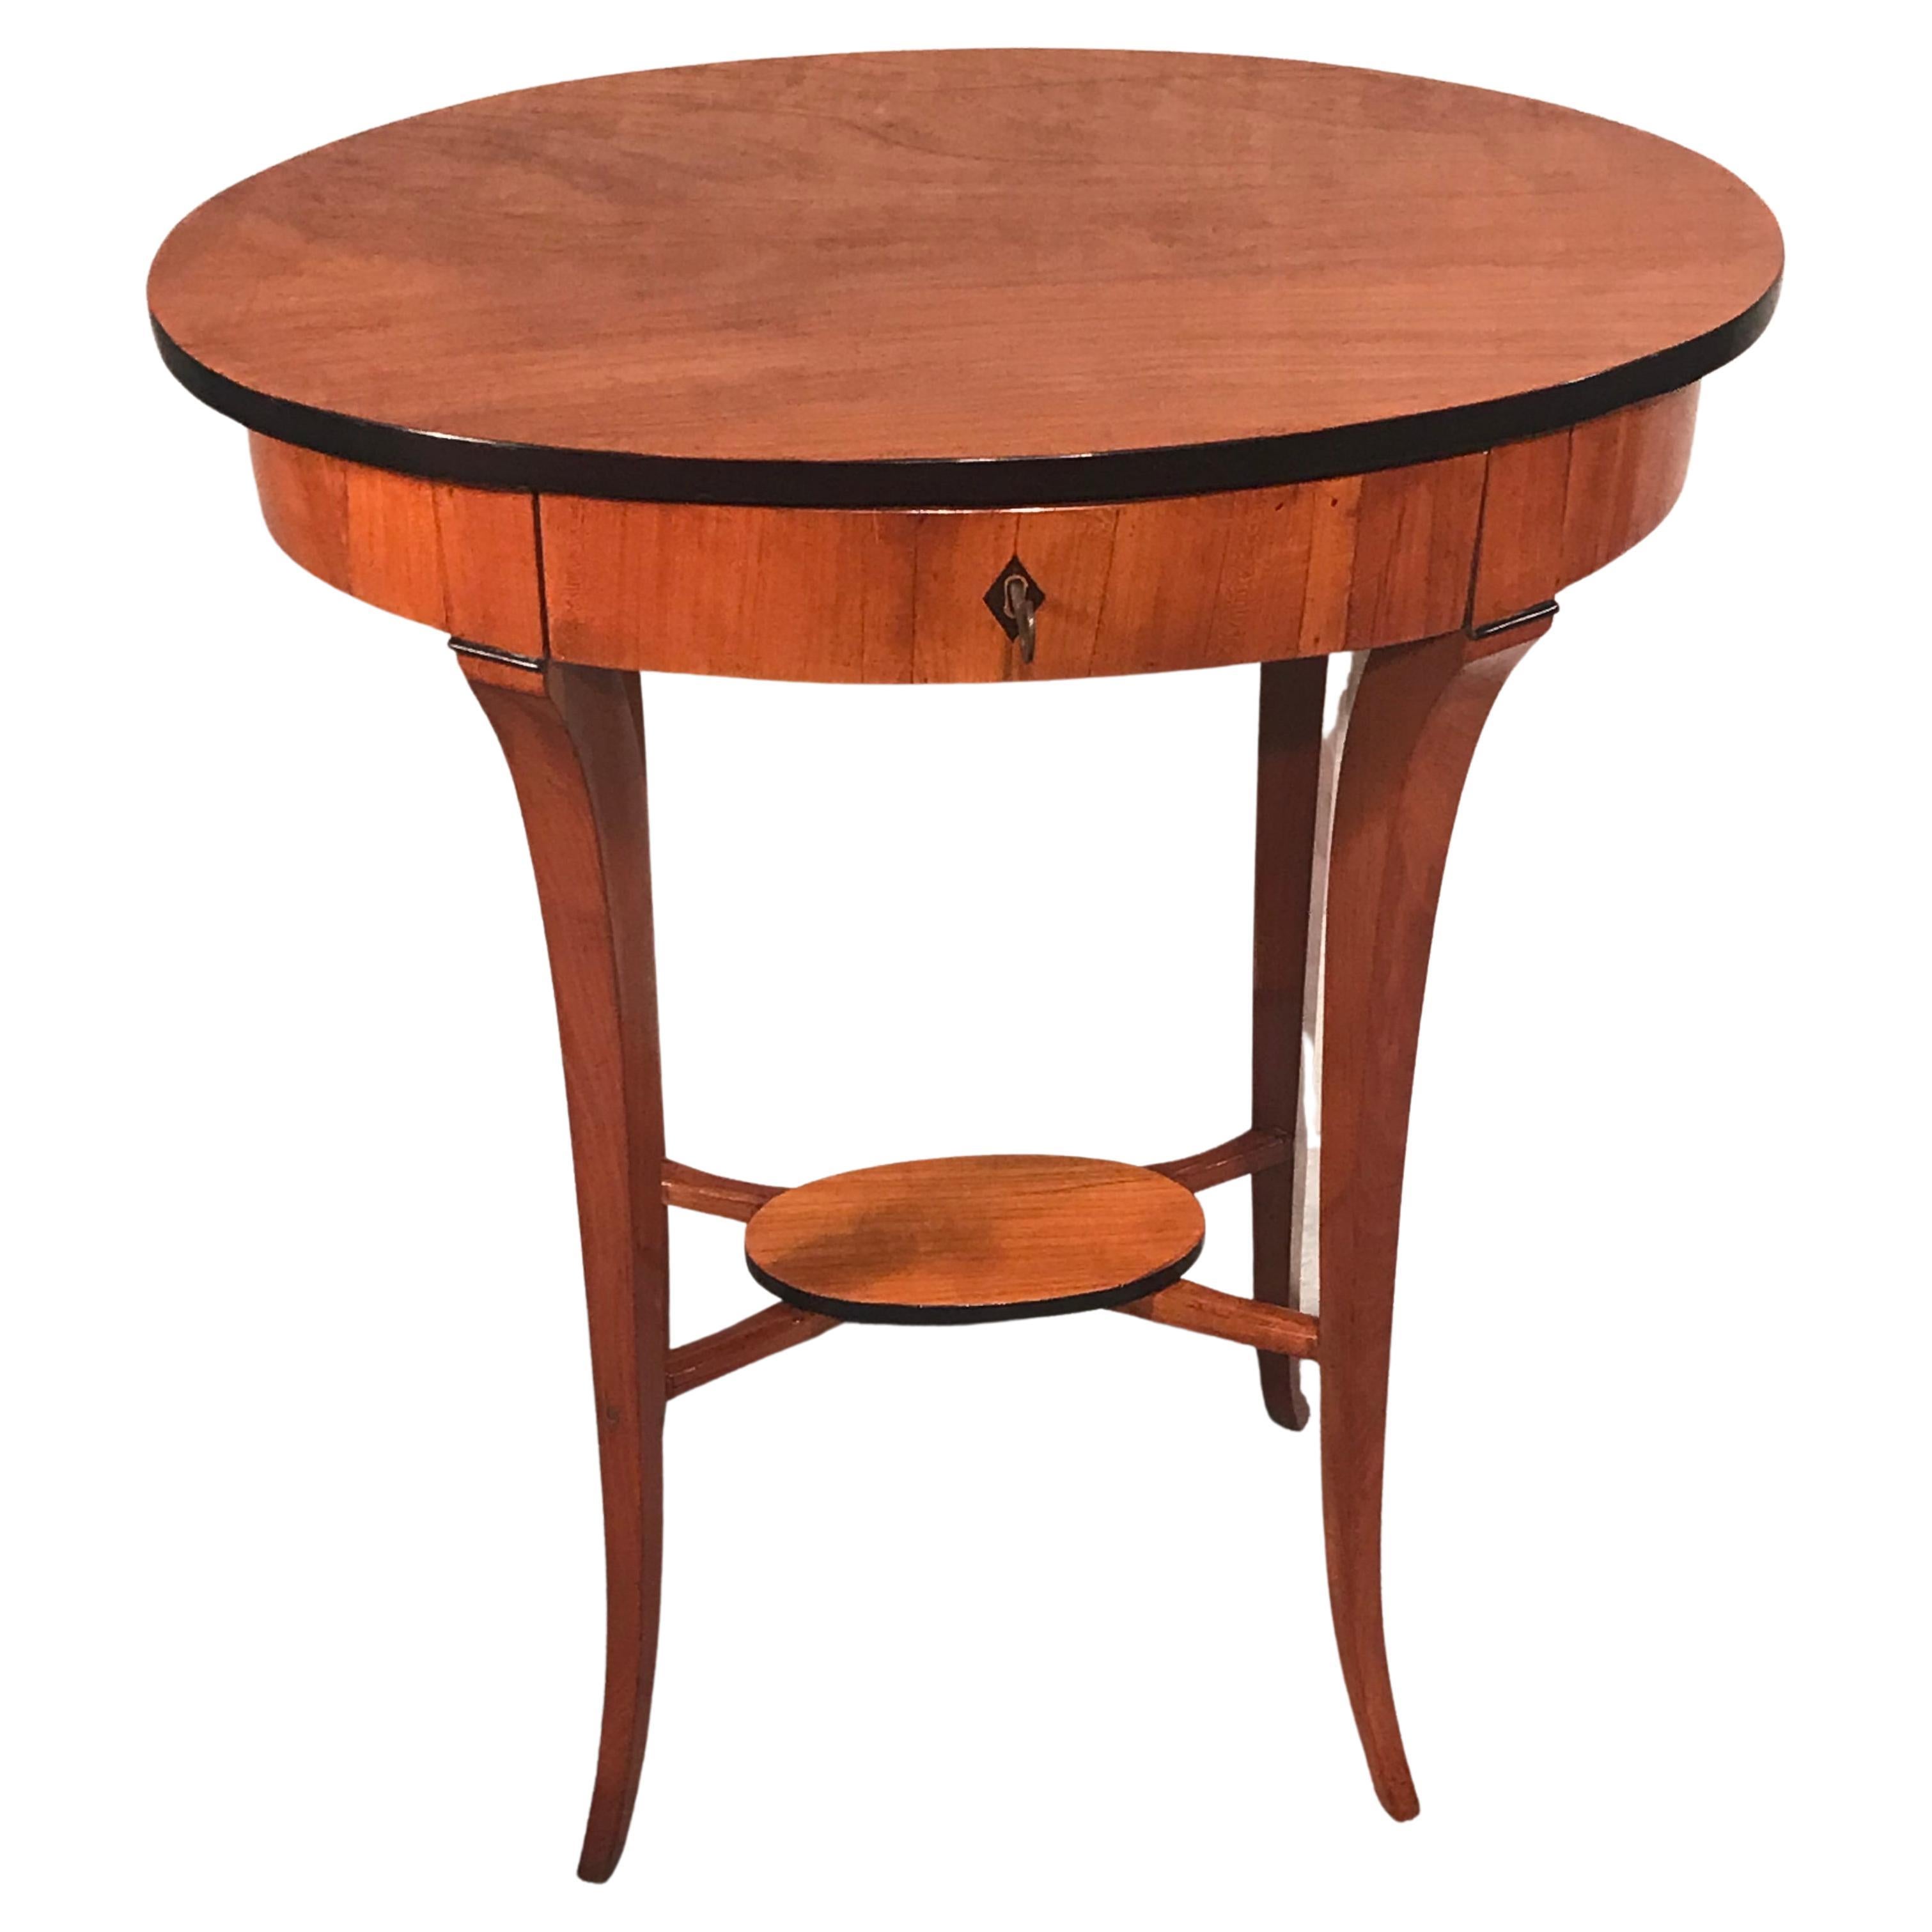 biedermeier-side-table-south-germany-1820-for-sale-at-1stdibs